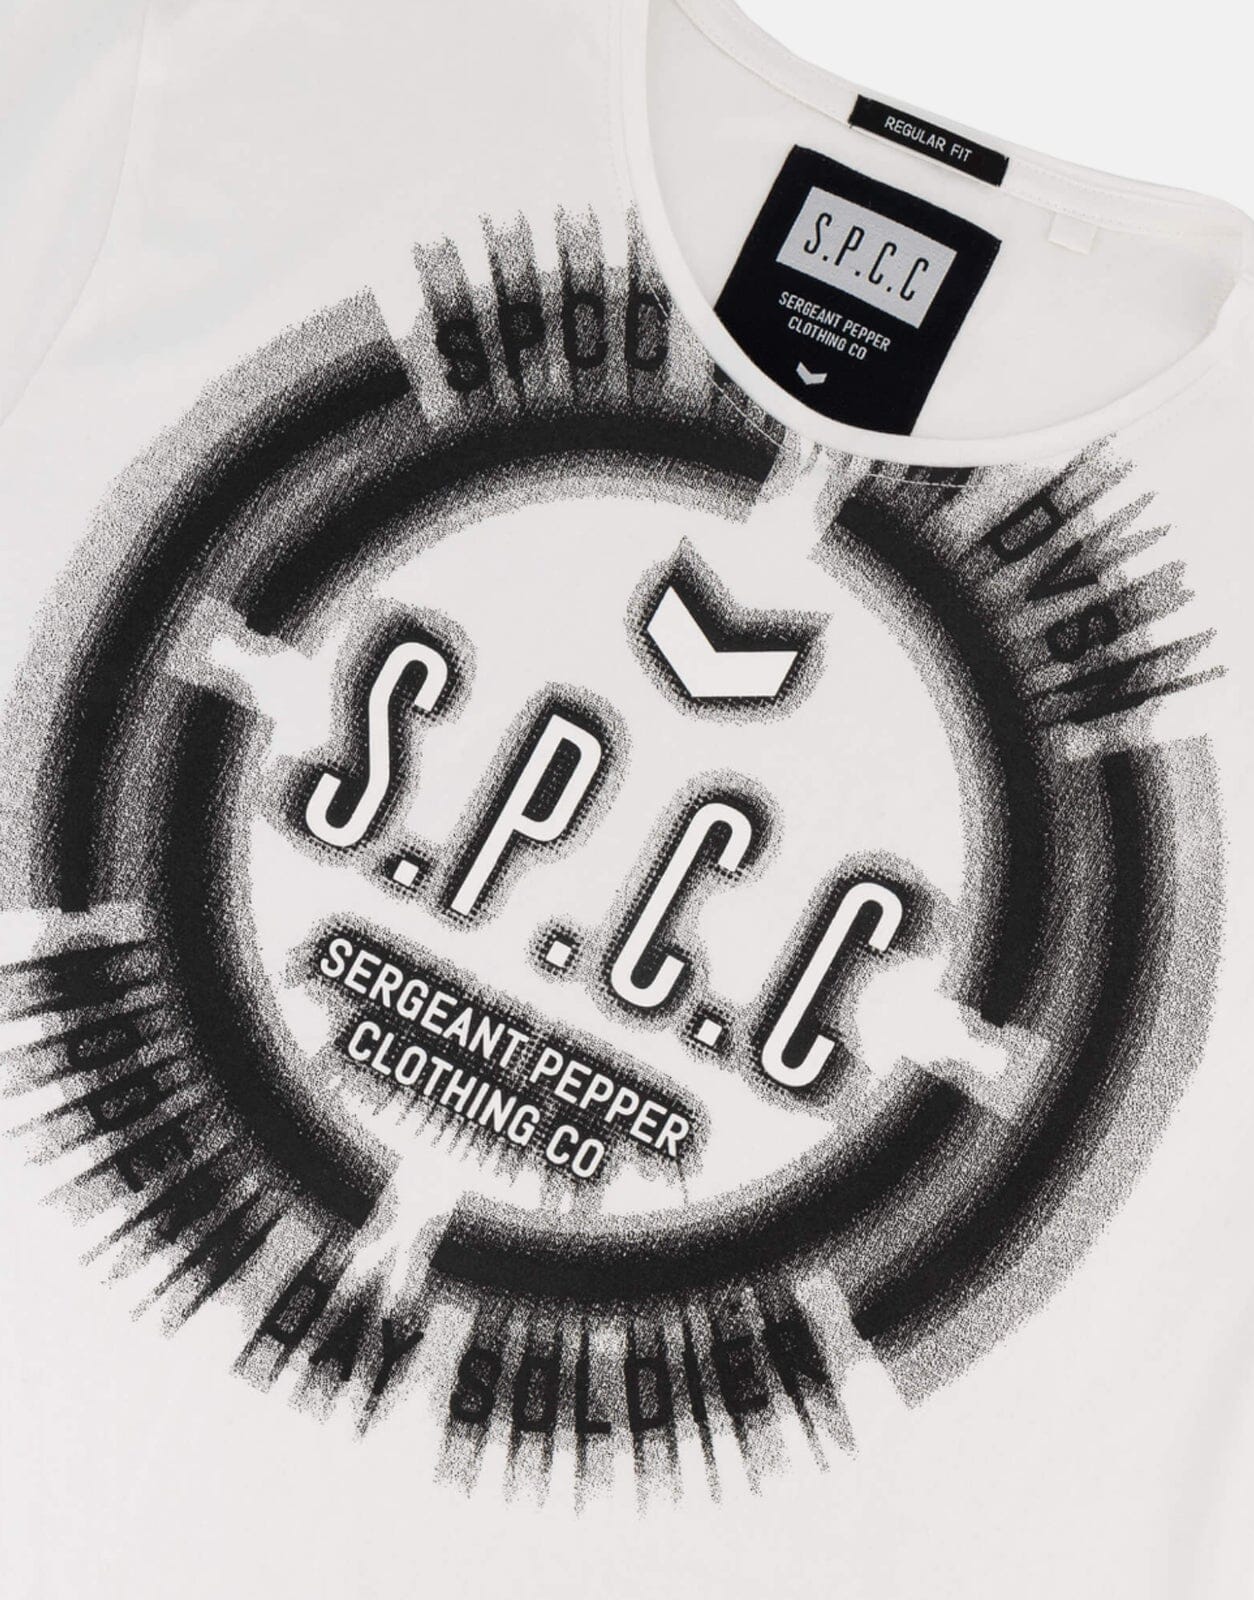 SPCC Pascoe White T-Shirt - Subwear